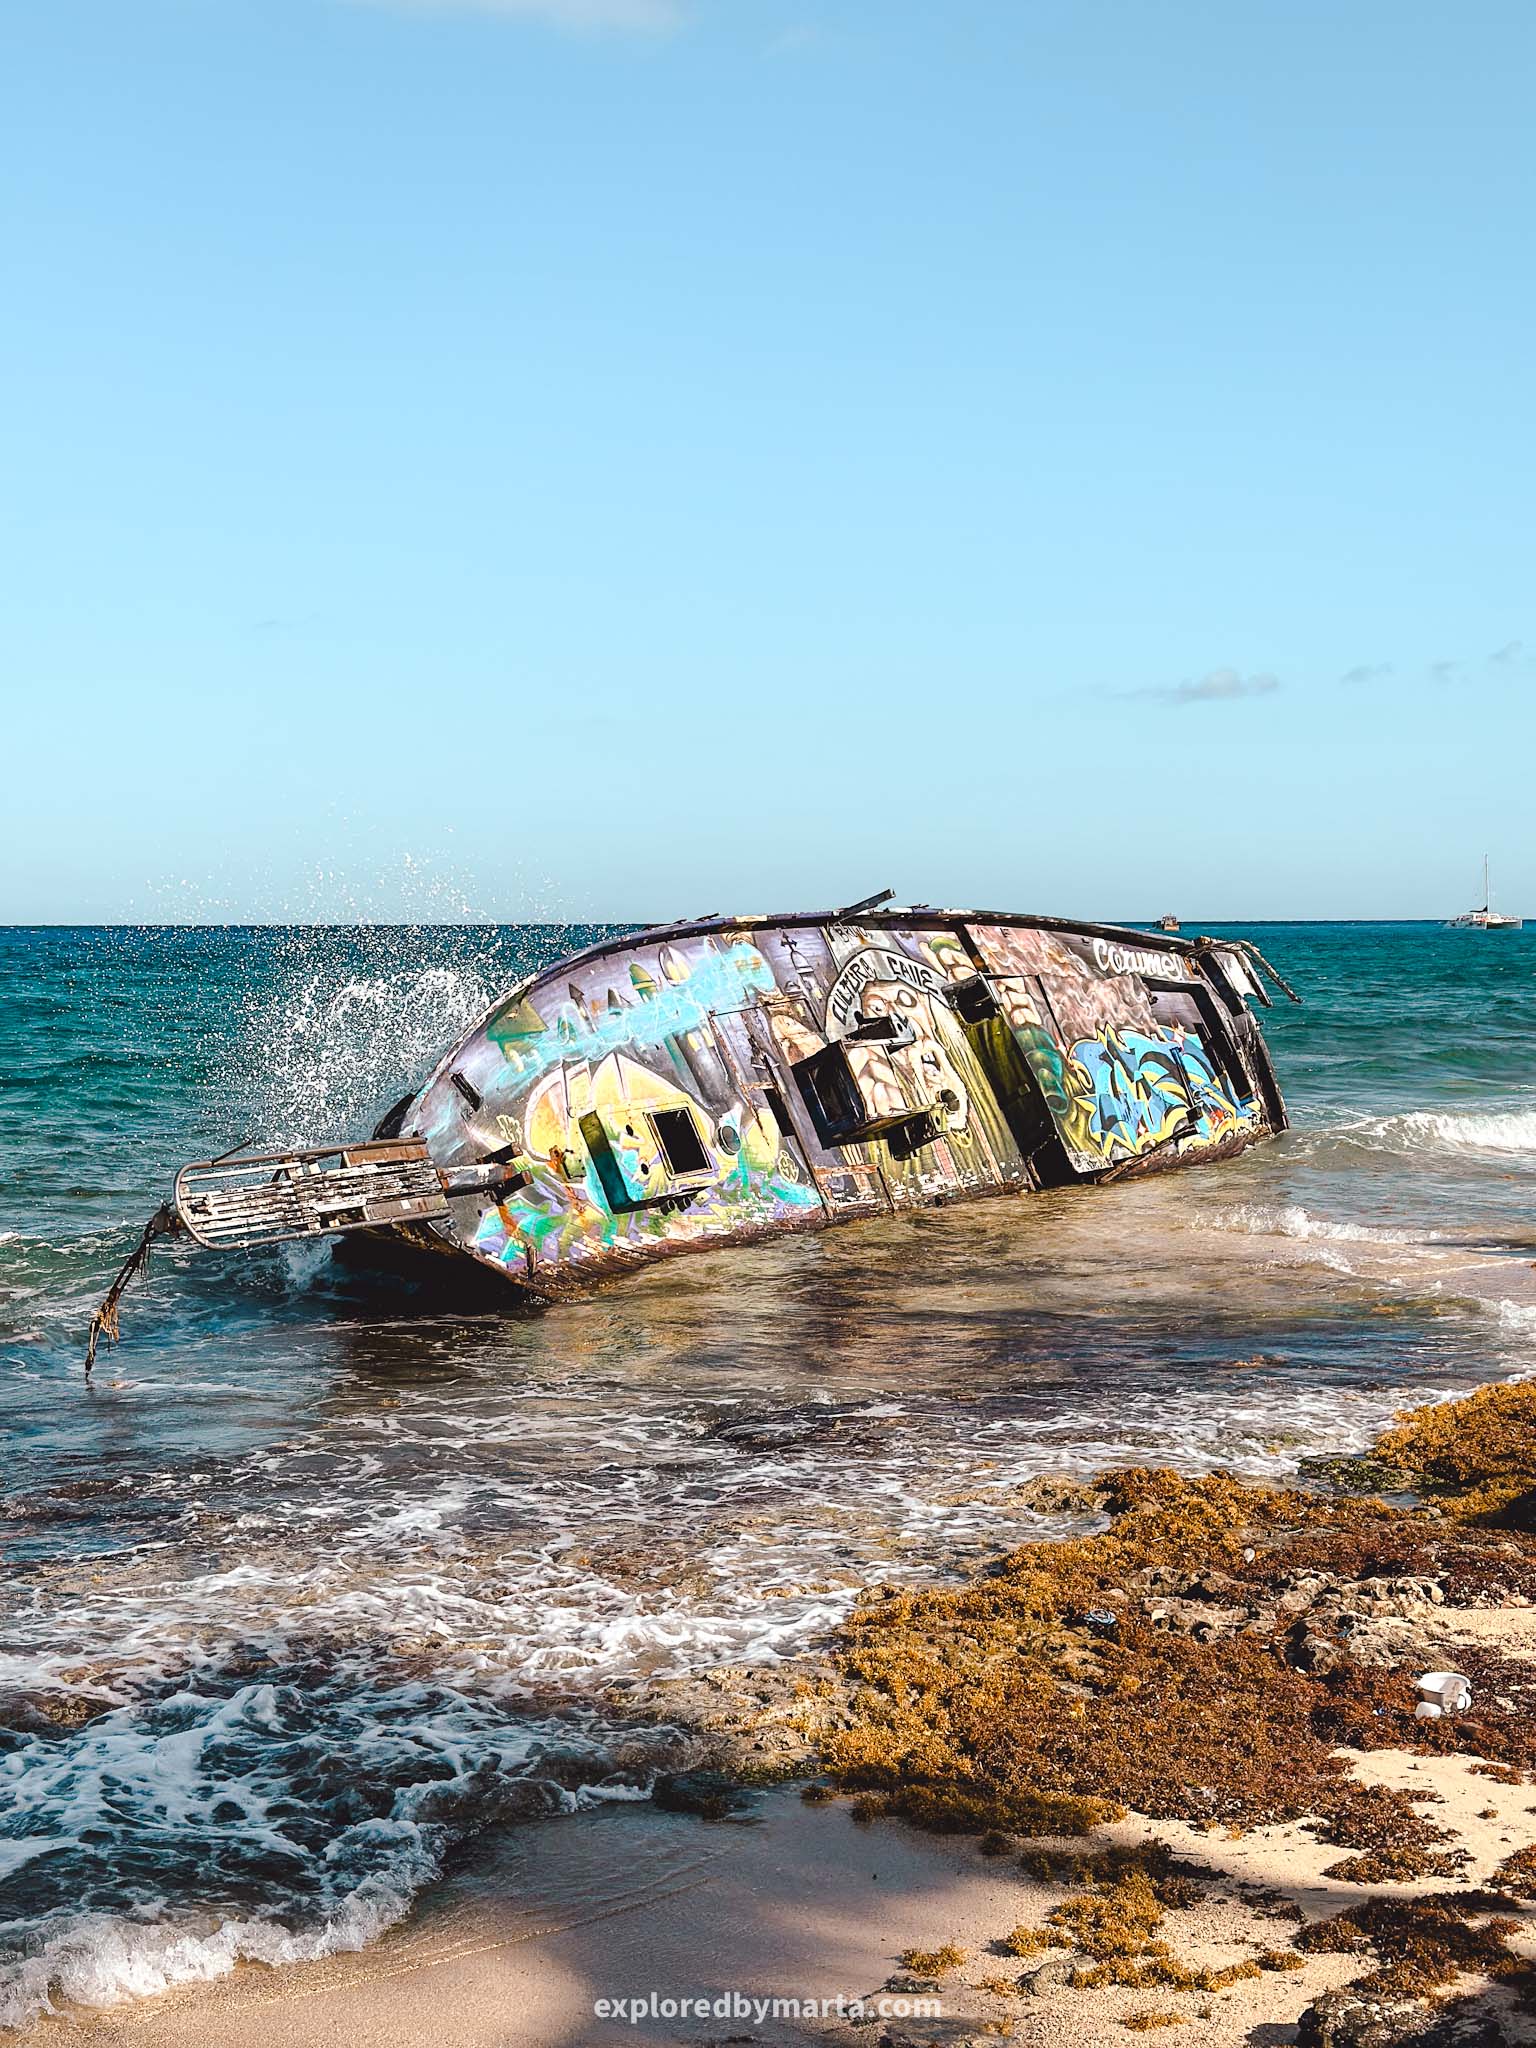 Sunken ship next to the seaside promenade in Cozumel, Mexico